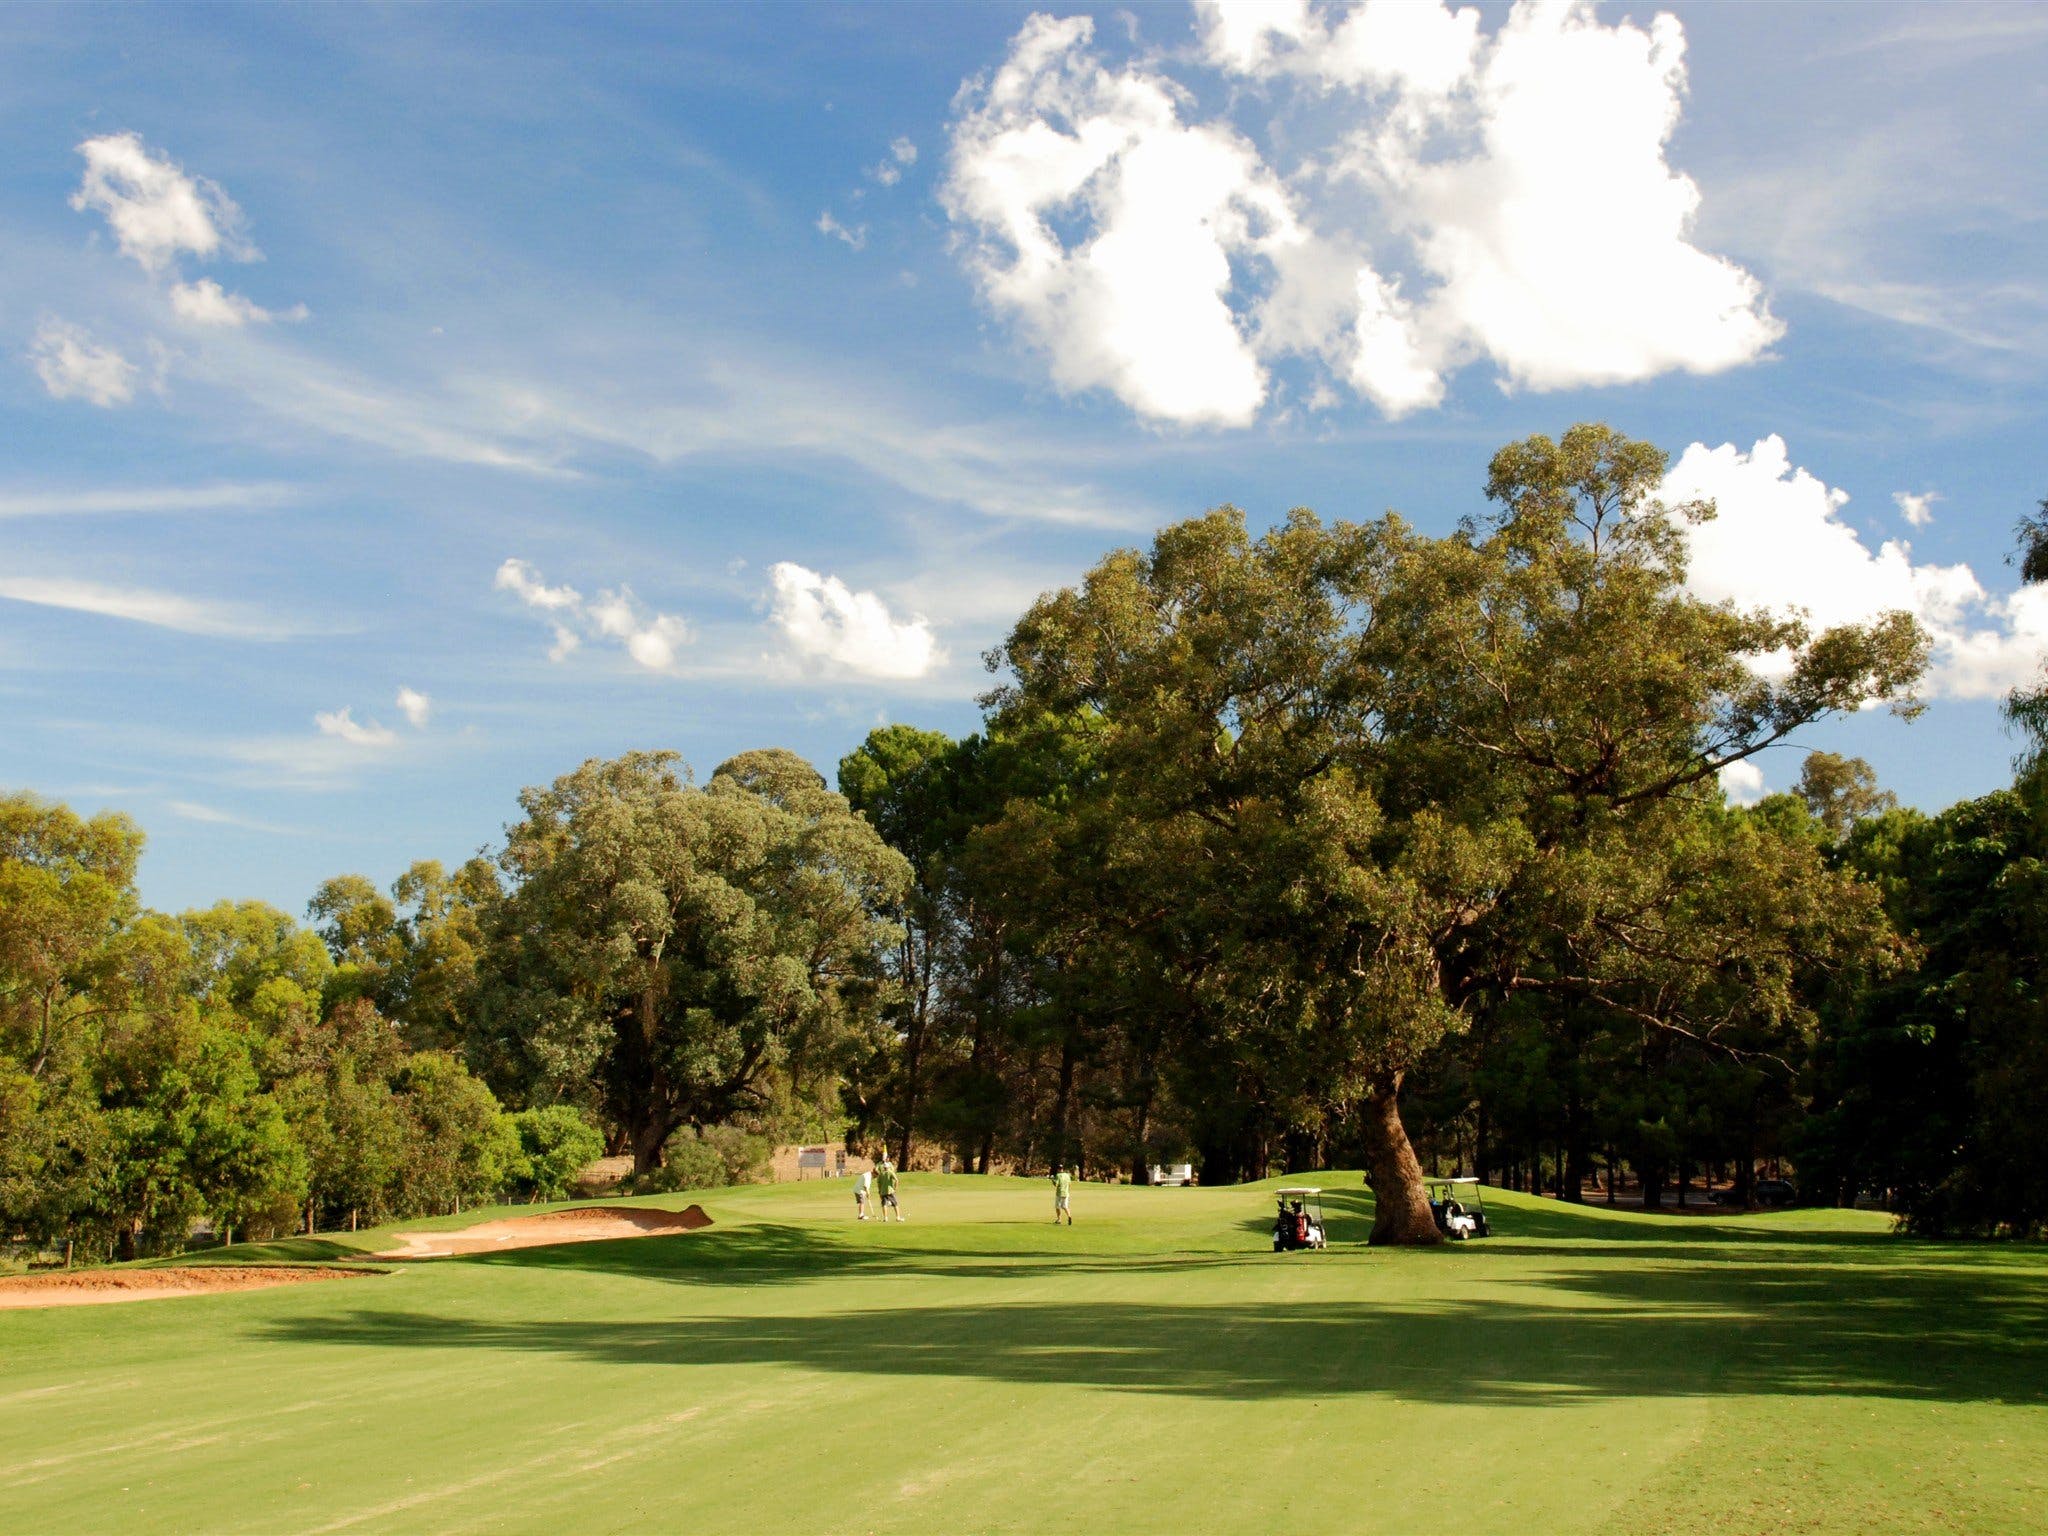 Corowa Golf Club - Attractions Melbourne